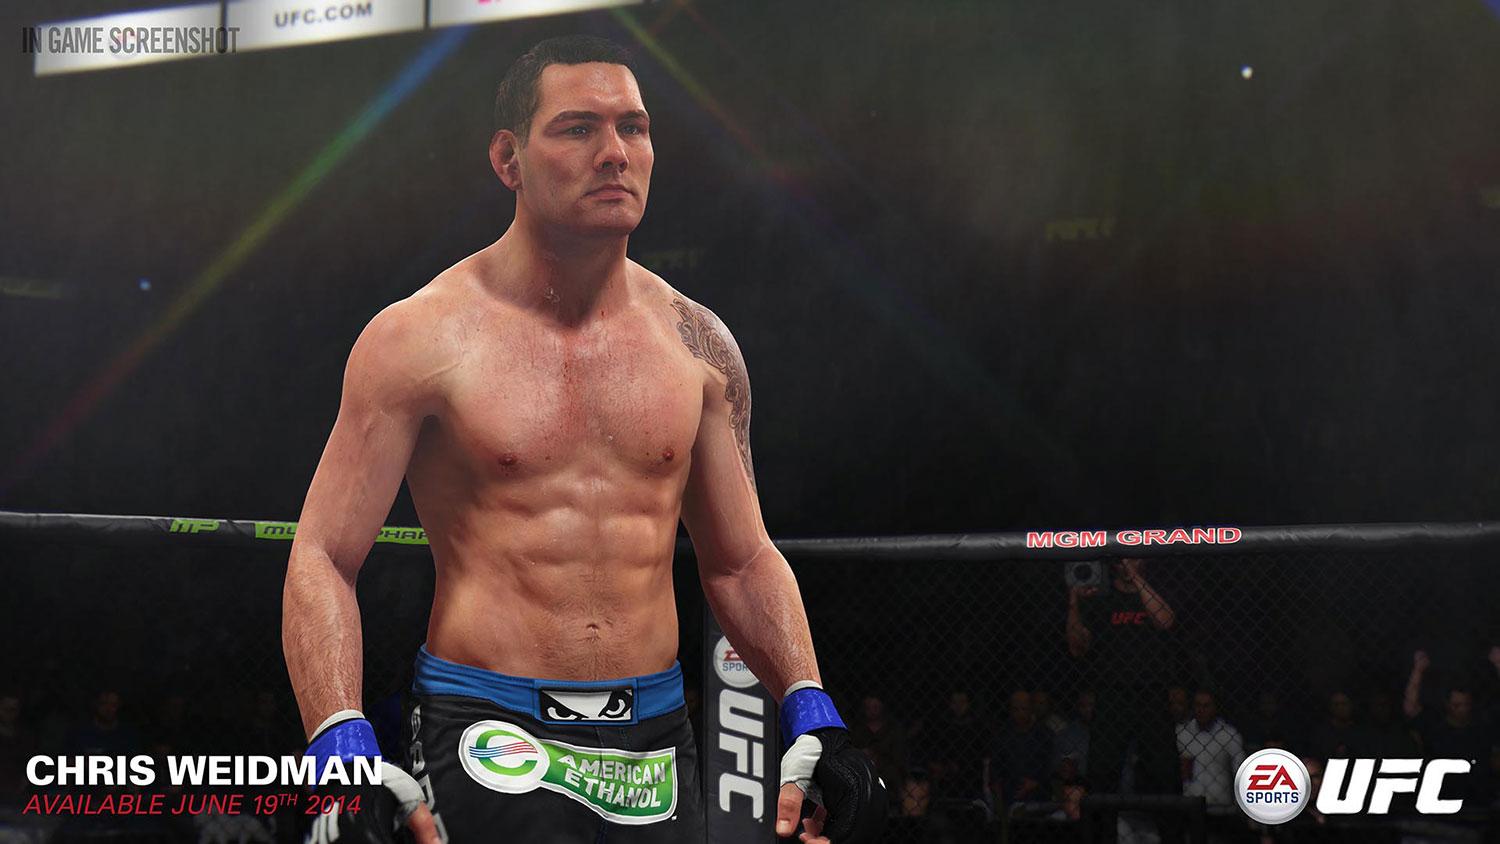 EA Sports UFC 5 - PS5, PlayStation 5